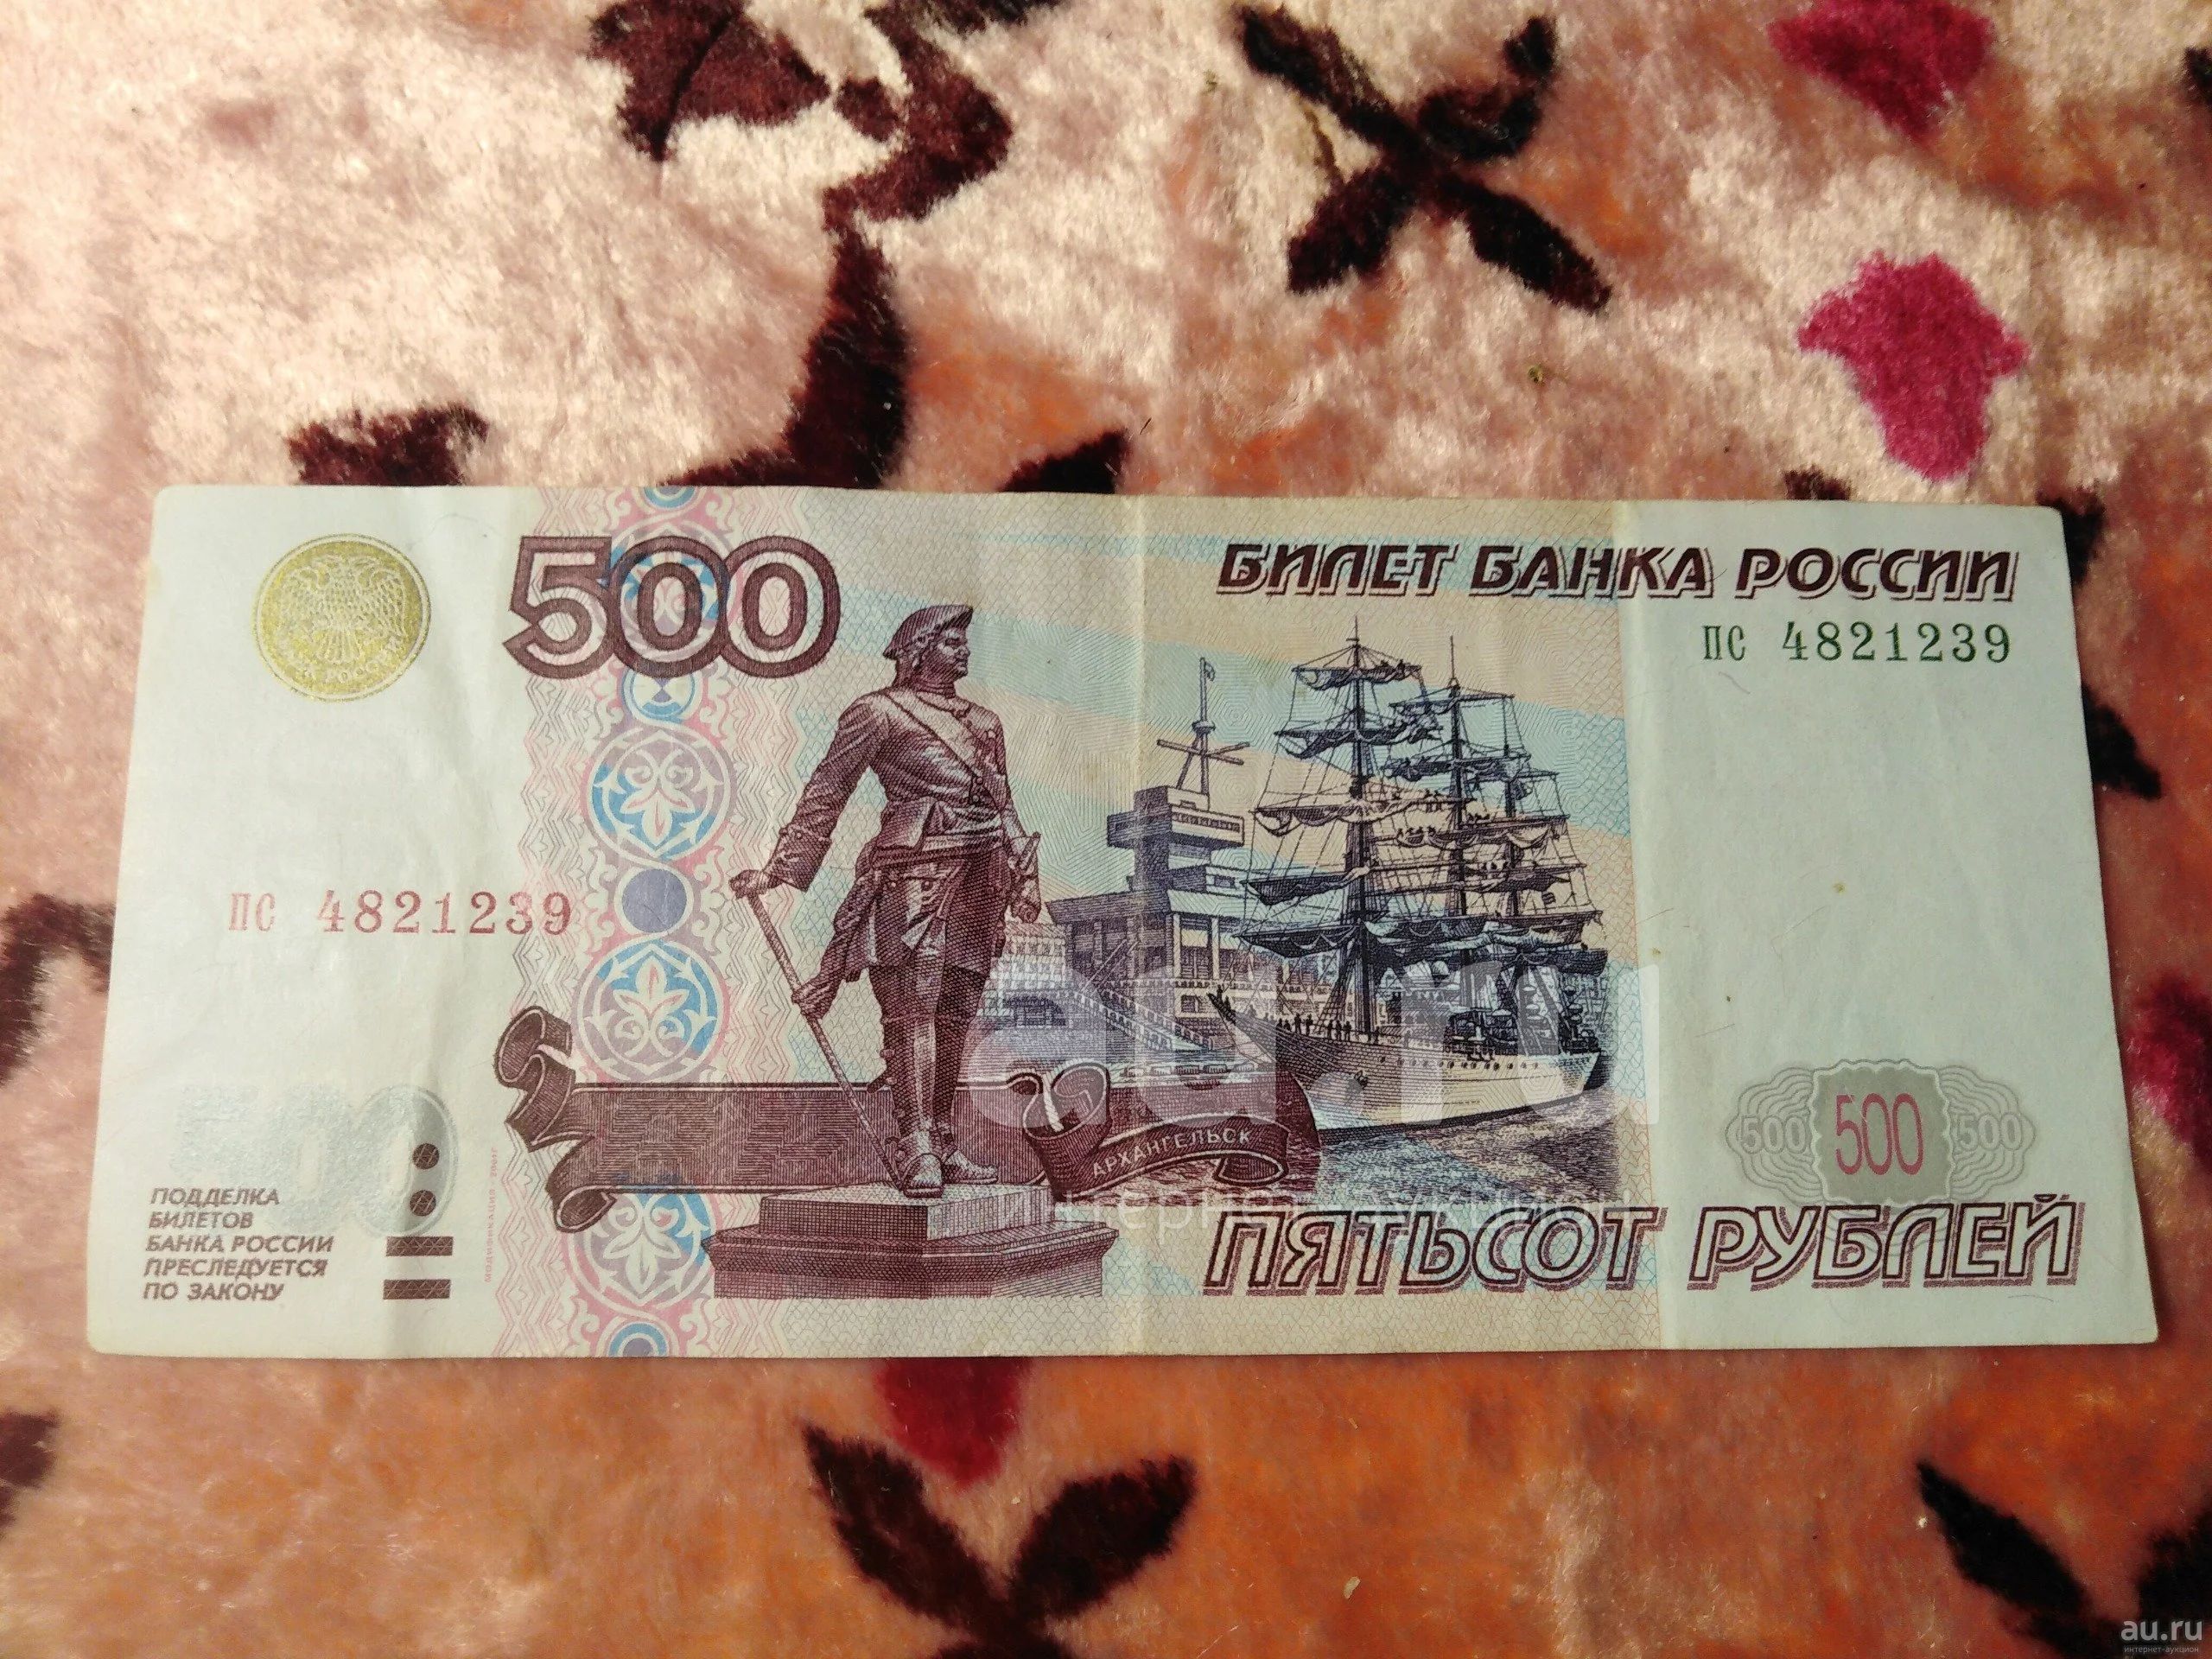 500 рублей на steam фото 95